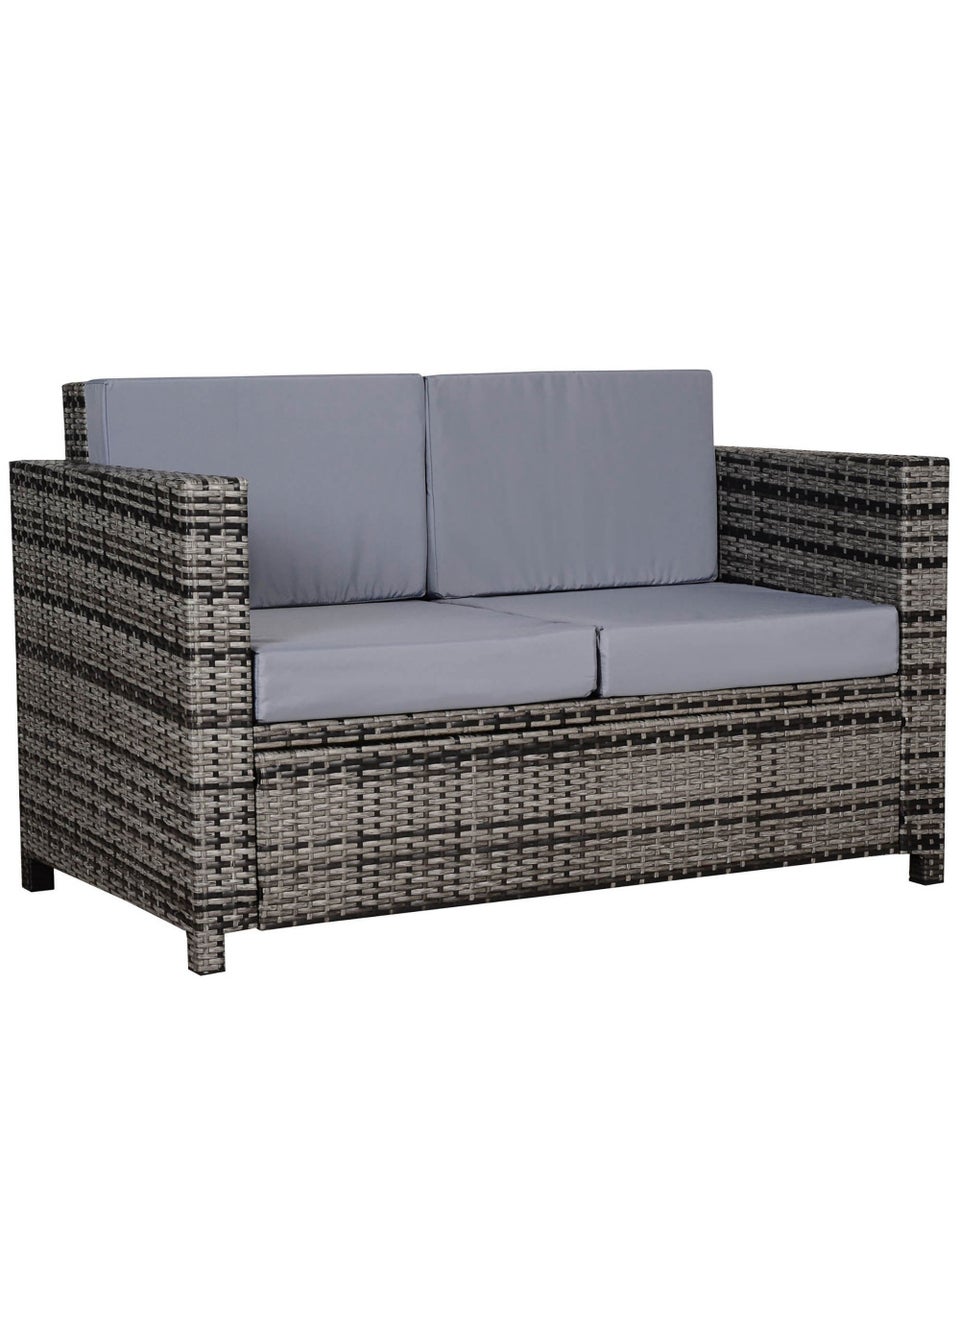 Outsunny 2-Seater Grey Wicker Garden Sofa (130cm x 70cm x 80cm)